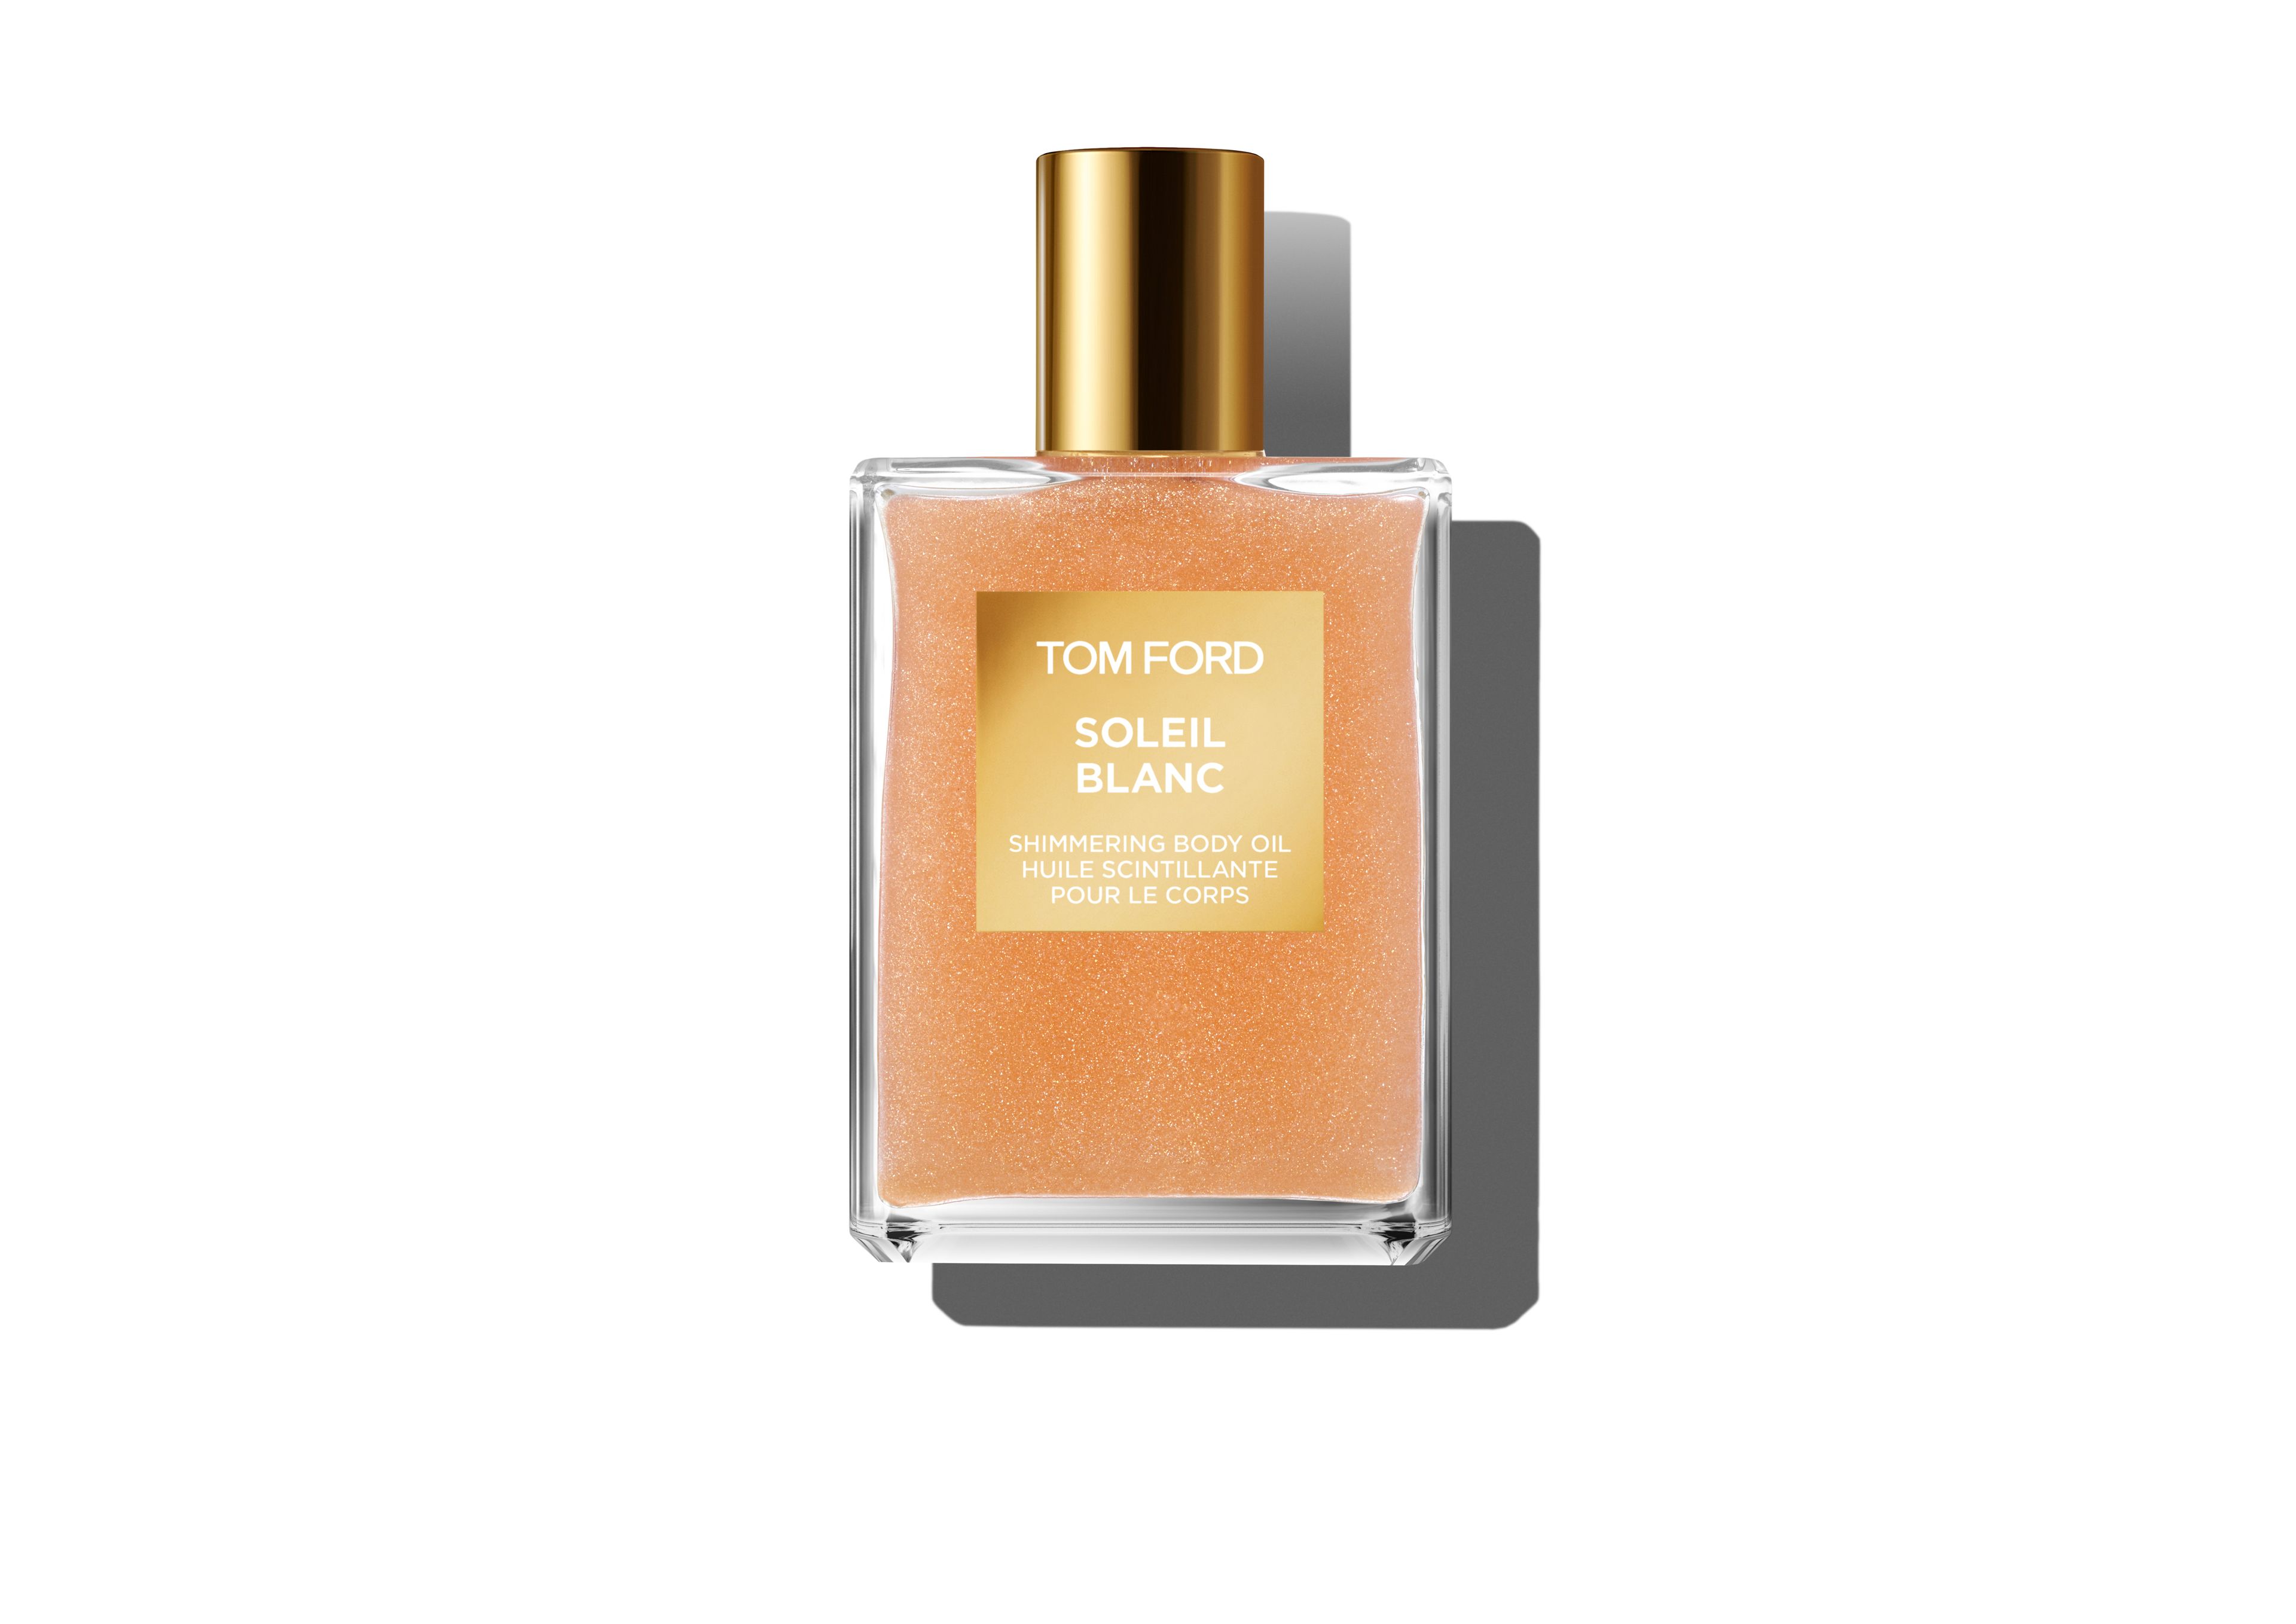 Tom Ford Soleil Blanc Shimmering Body Oil

shade: Rose Gold 4